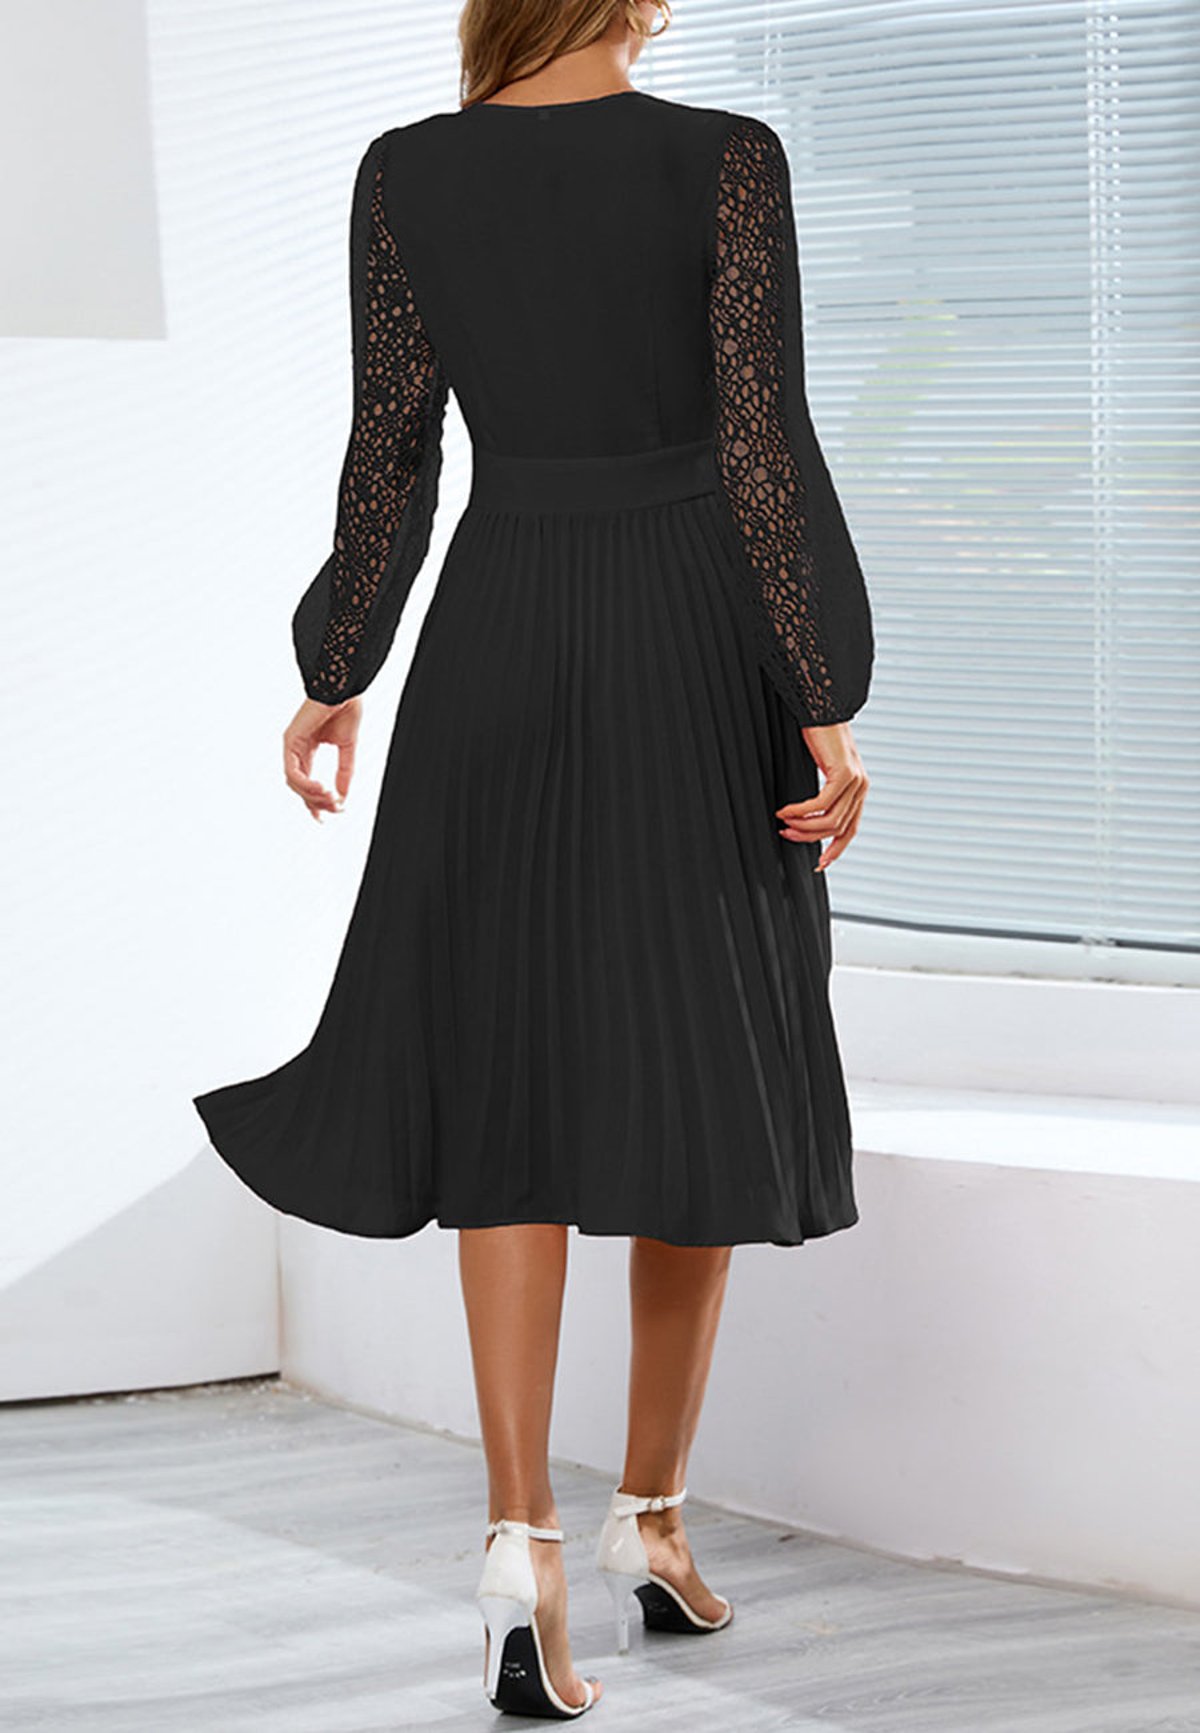 Buy From Anna-Kaci Aztec Print Bell Sleeve Dress Dresses Black USA Online  Store - International Shipping - Anna-Kaci Shop